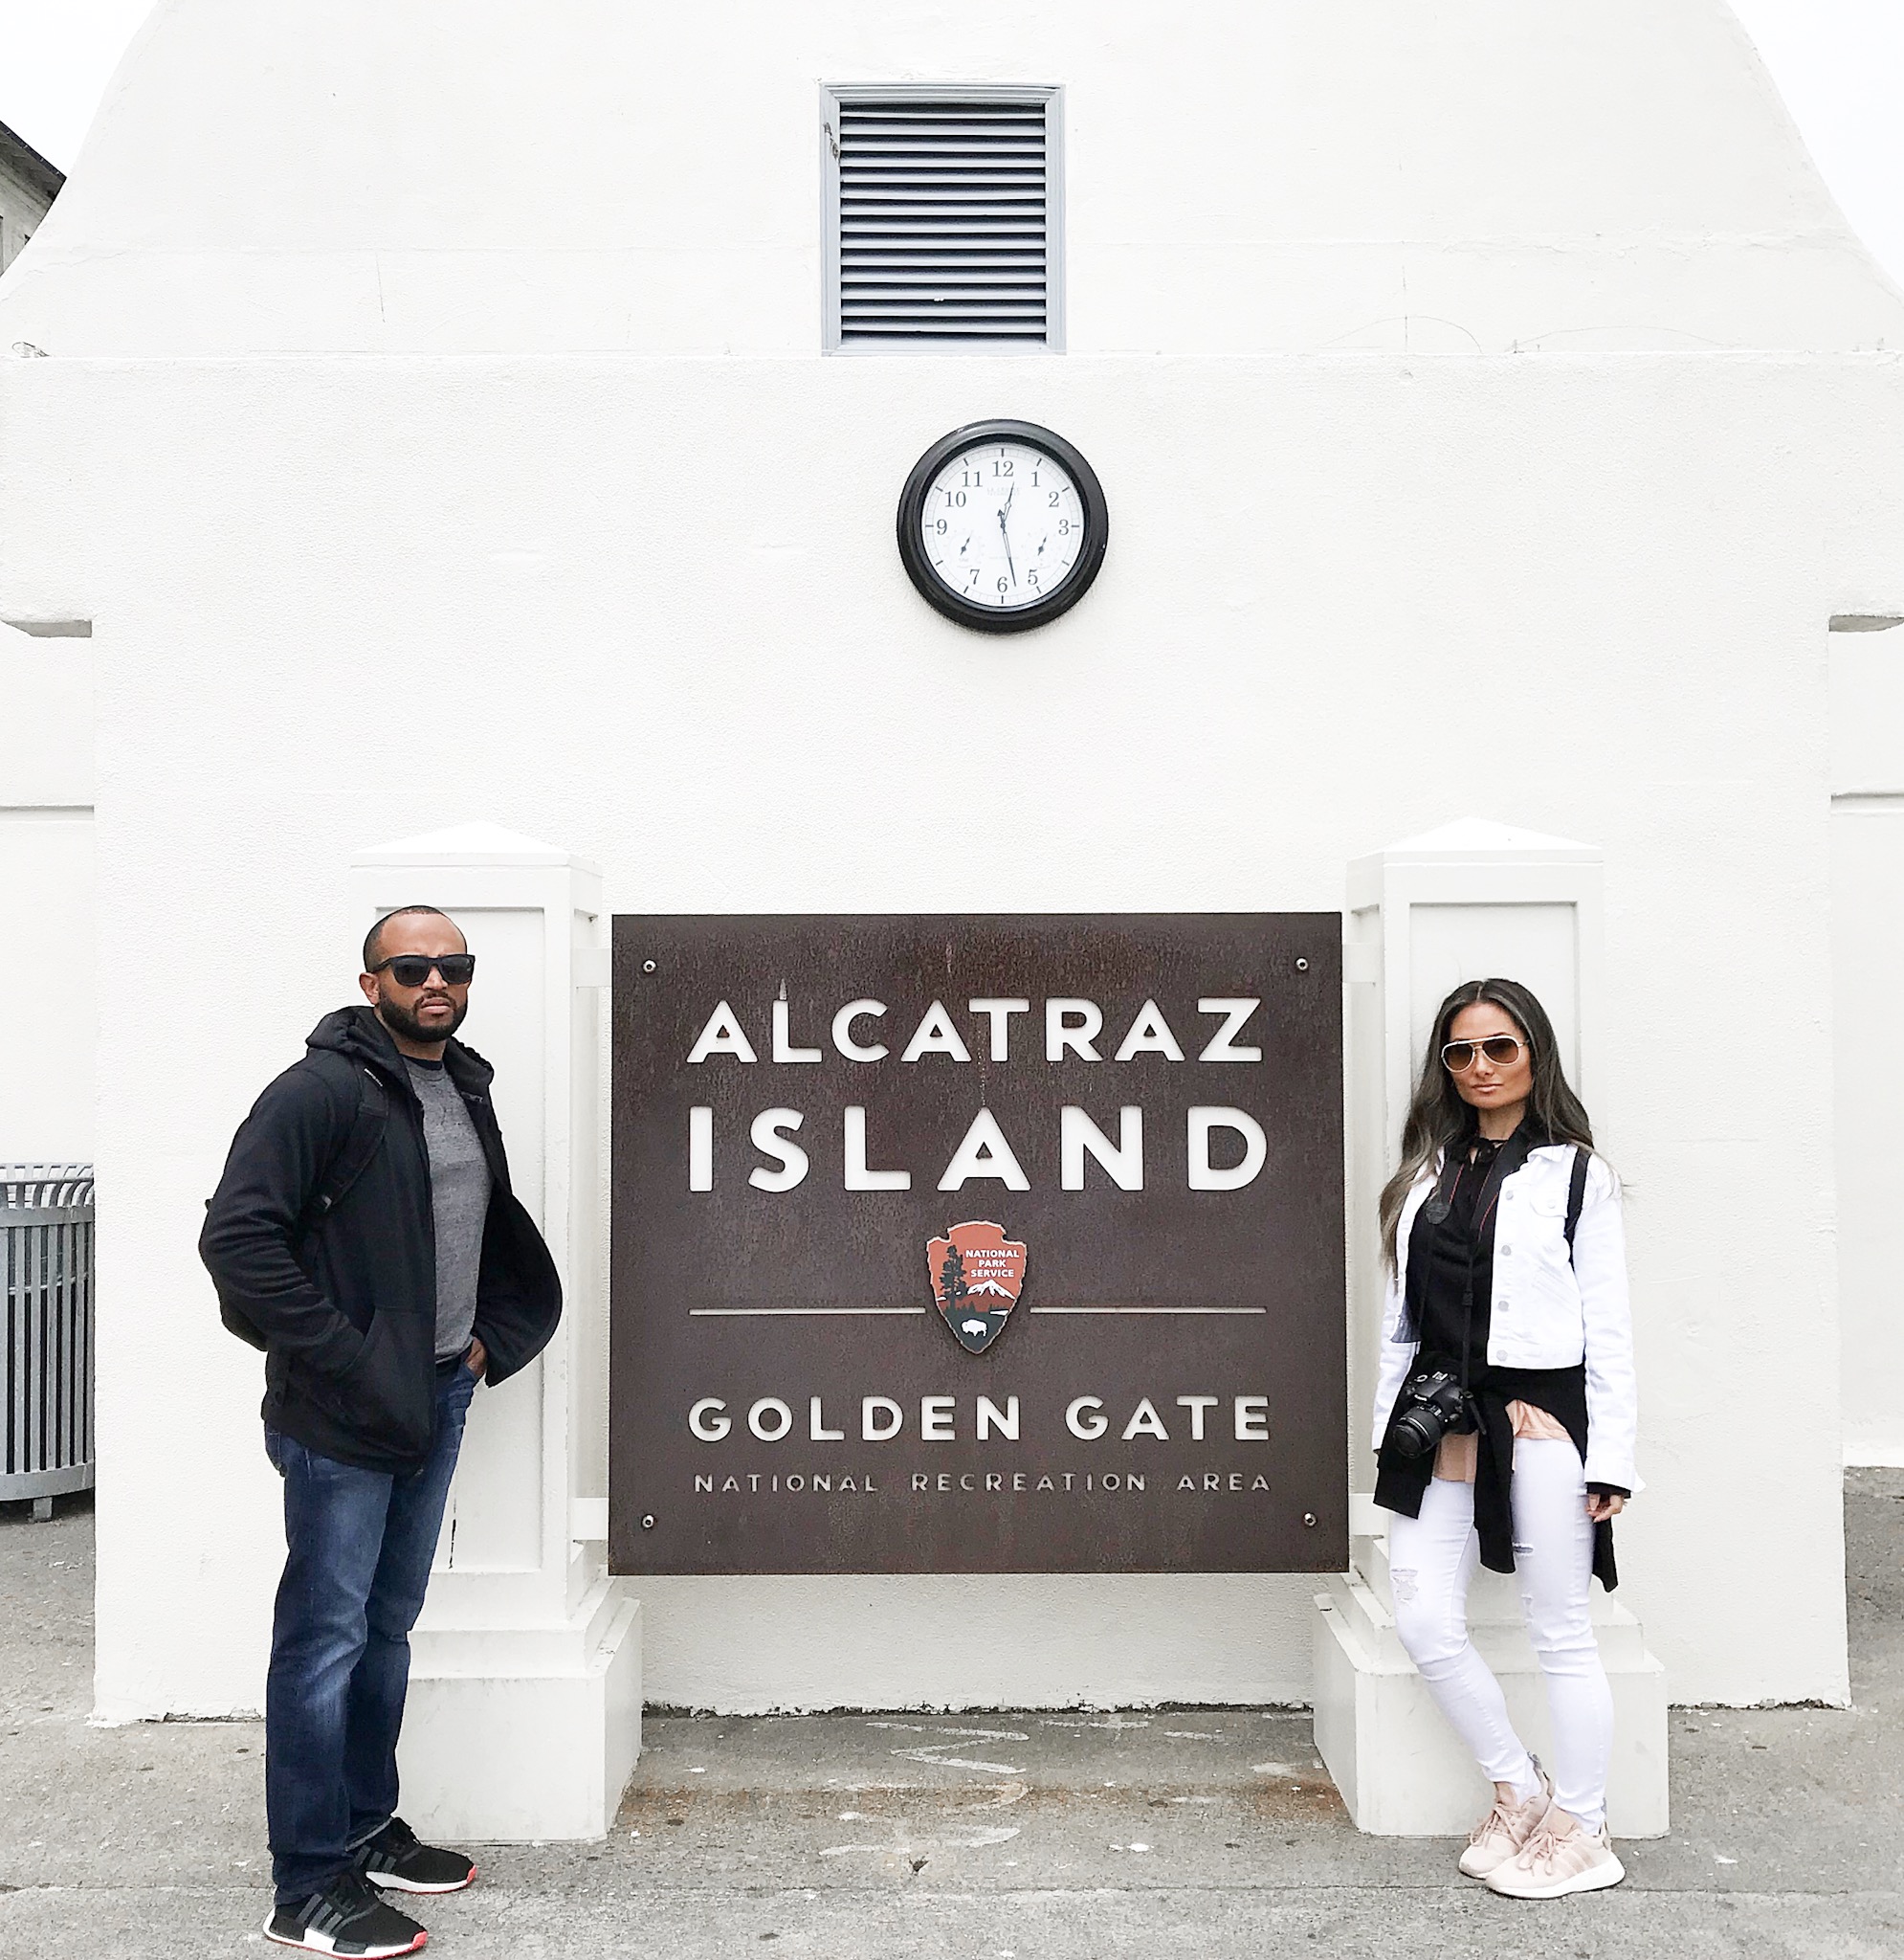 Alcatraz island, Alcatraz tour, Alcatraz San Francisco, Alcatraz history, Alcatraz, Alcatraz prison,Alcatraz cruises, Alcatraz excursion, must do in San Francisco 